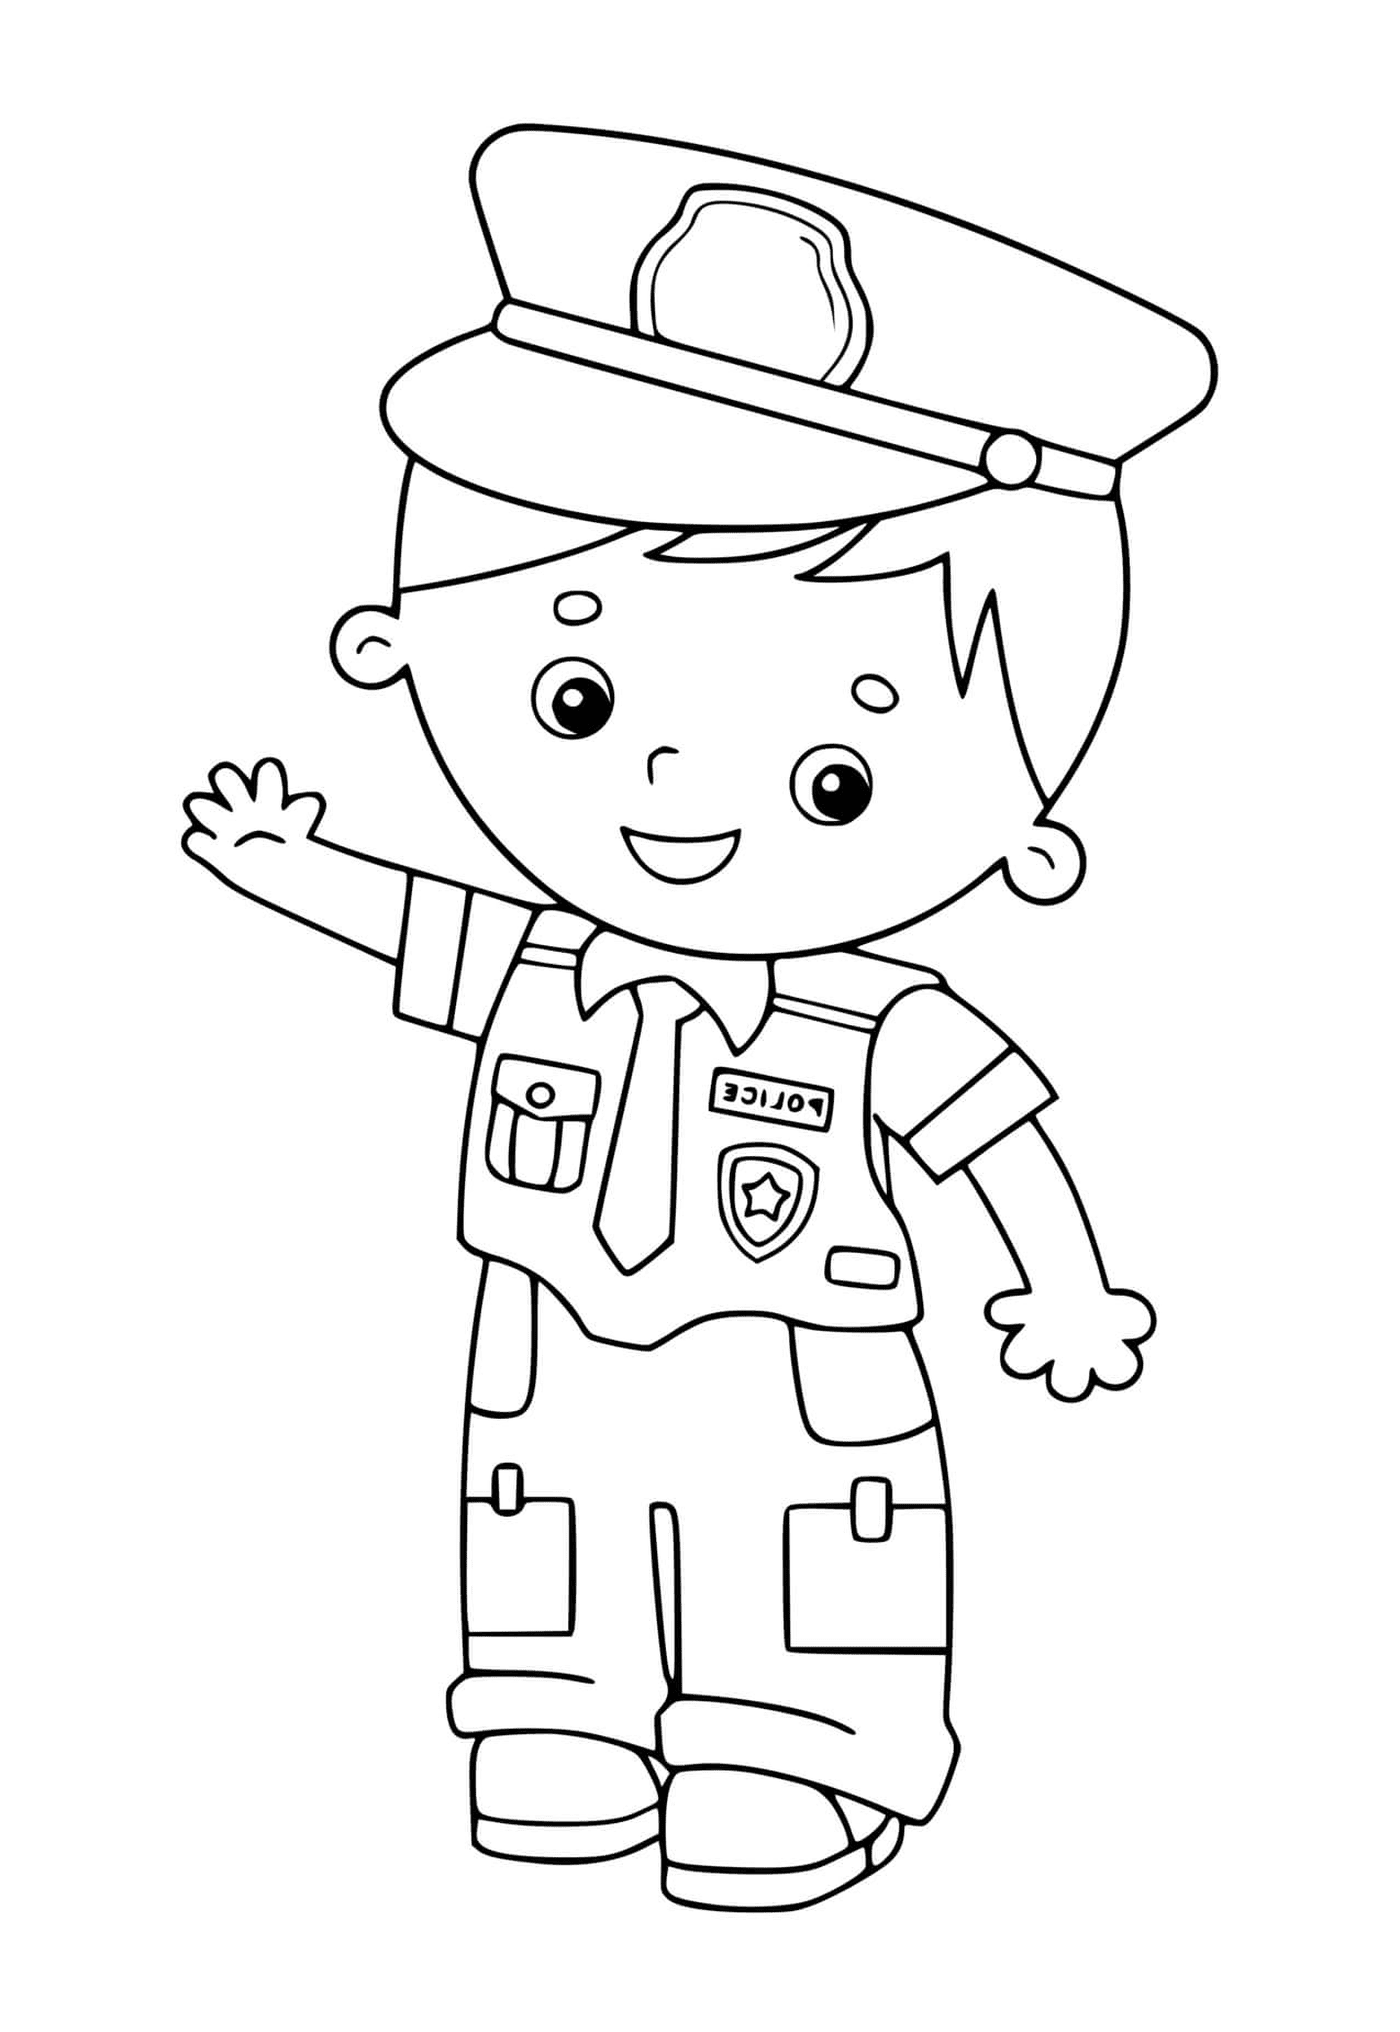  Child in police uniform 